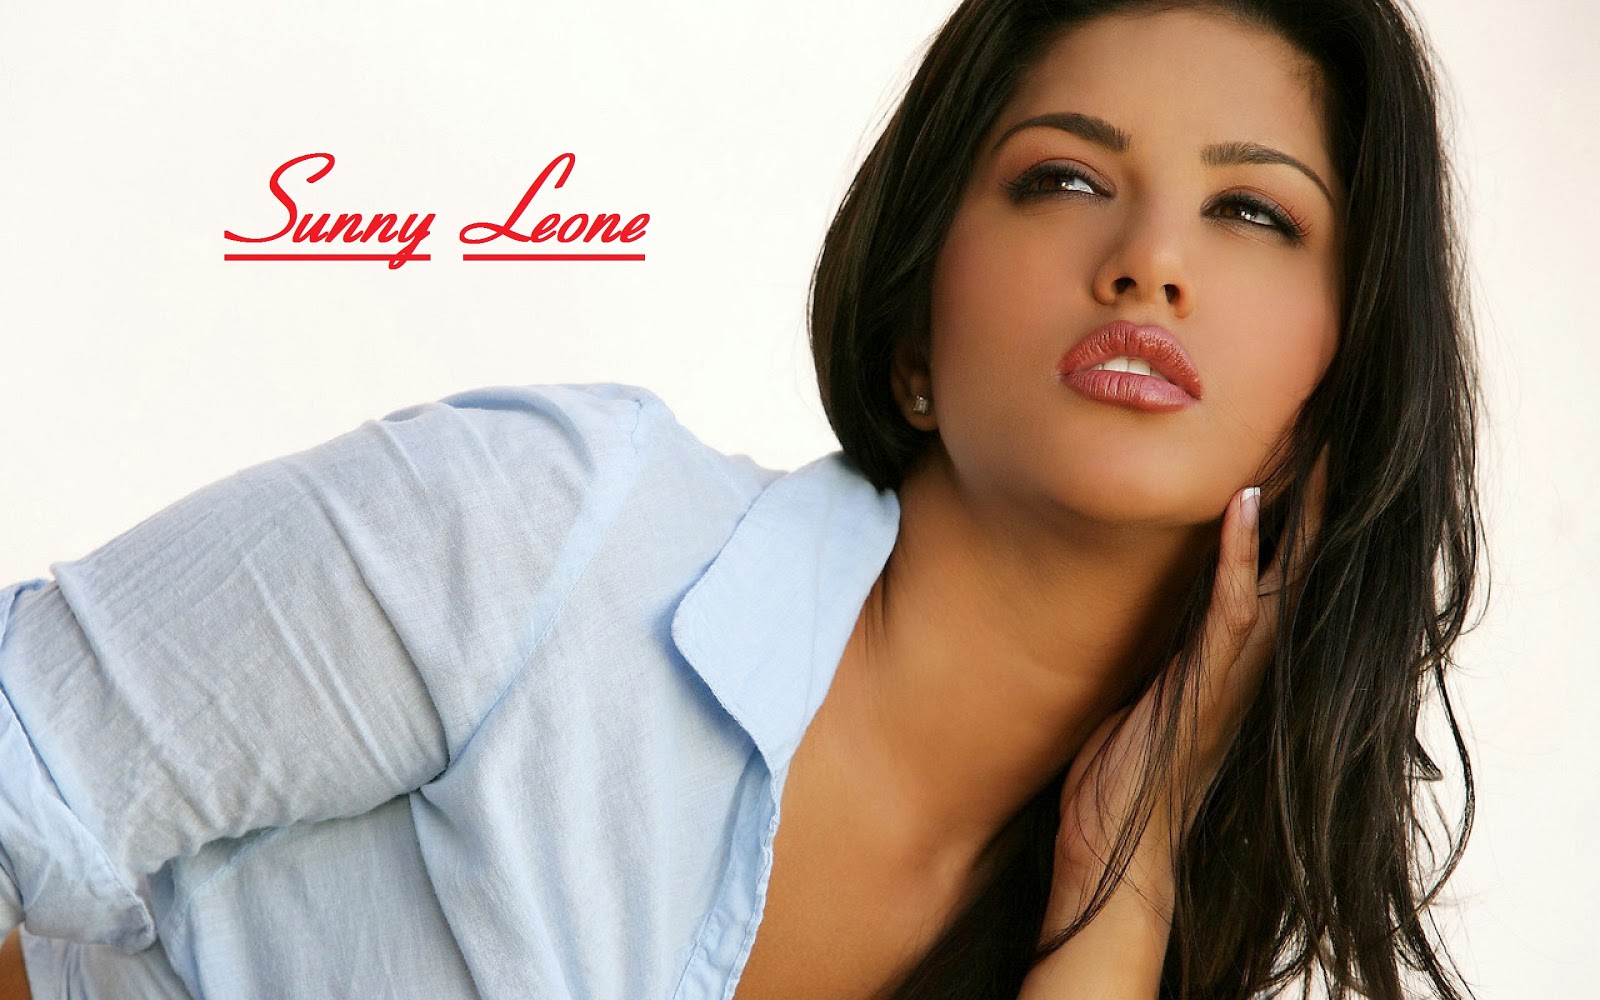 Sunny Leone Watsapp Image New Calendar Template Site